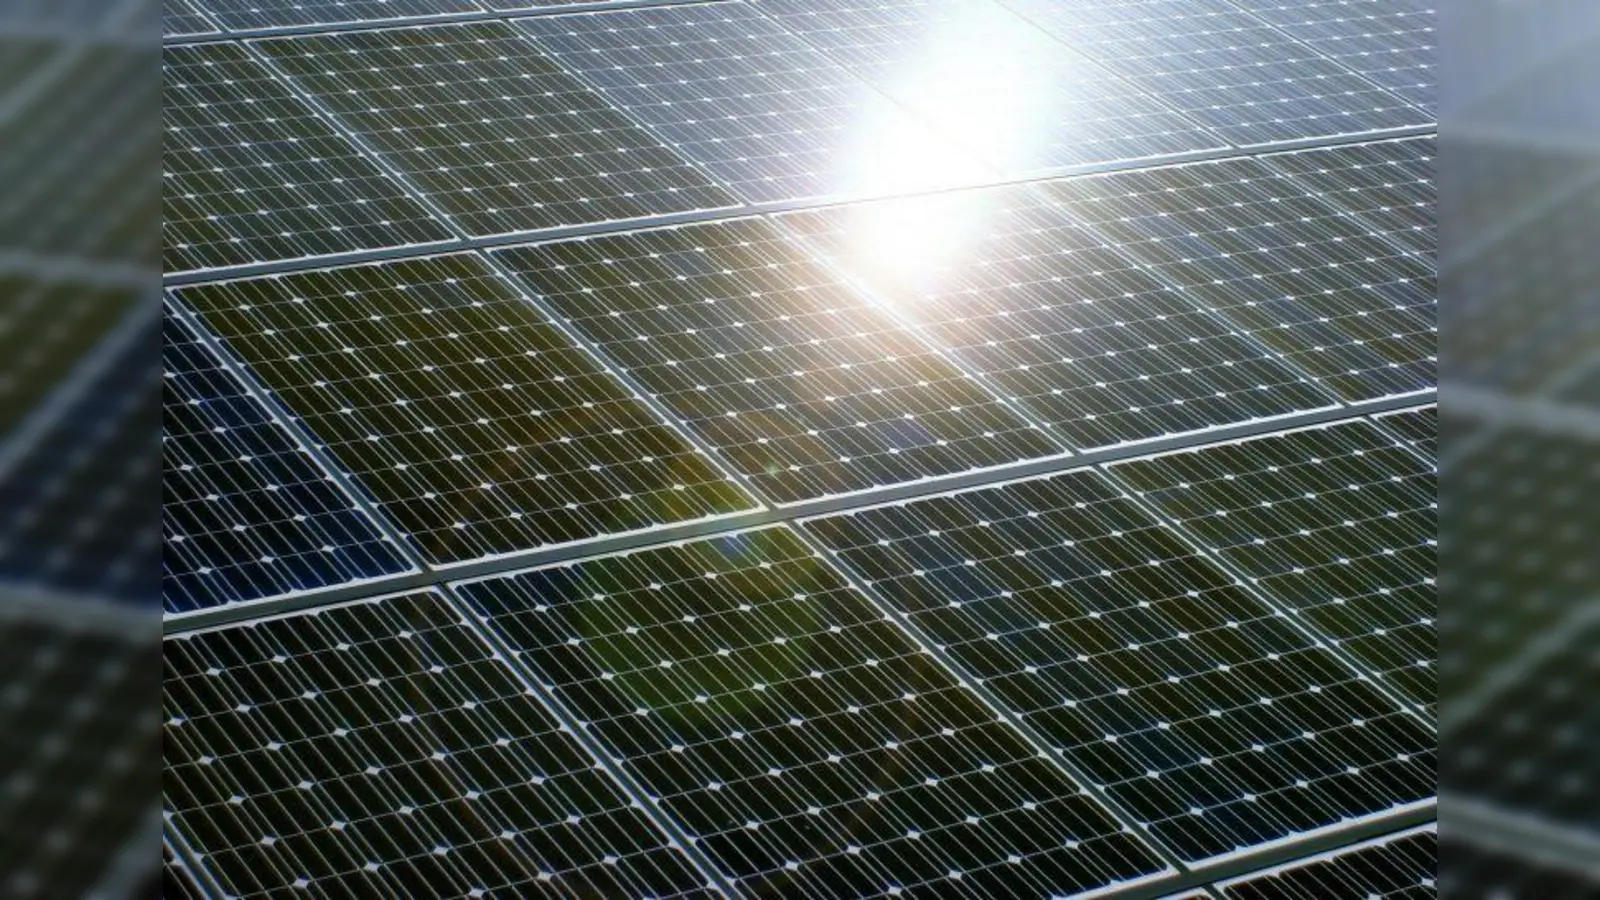 Solarzellen (Foto: Margit Spöttle, Landratsamt Augsburg )